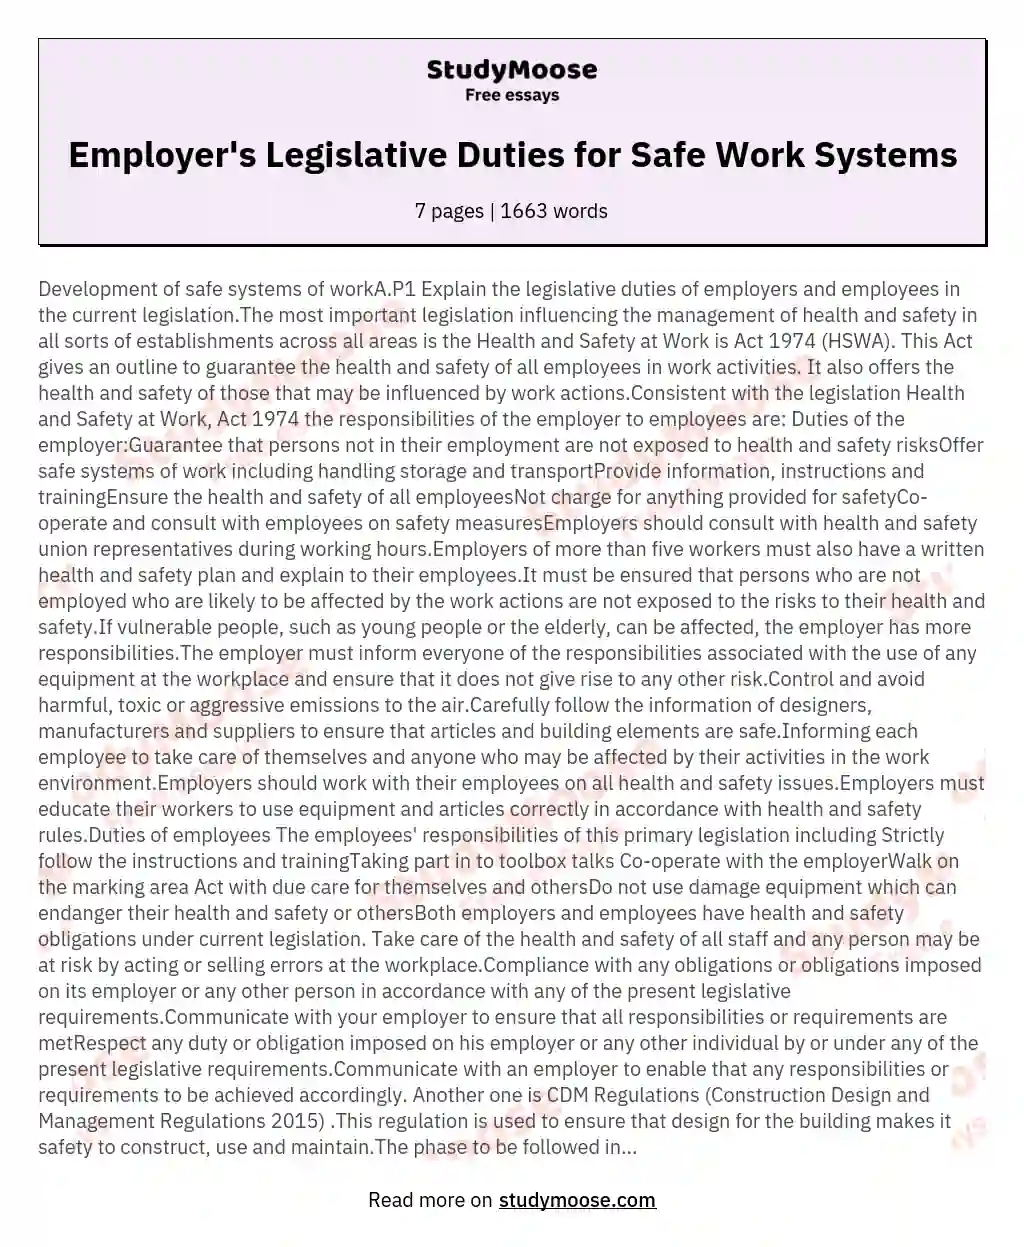 Development of safe systems of workAP1 Explain the legislative duties of employers